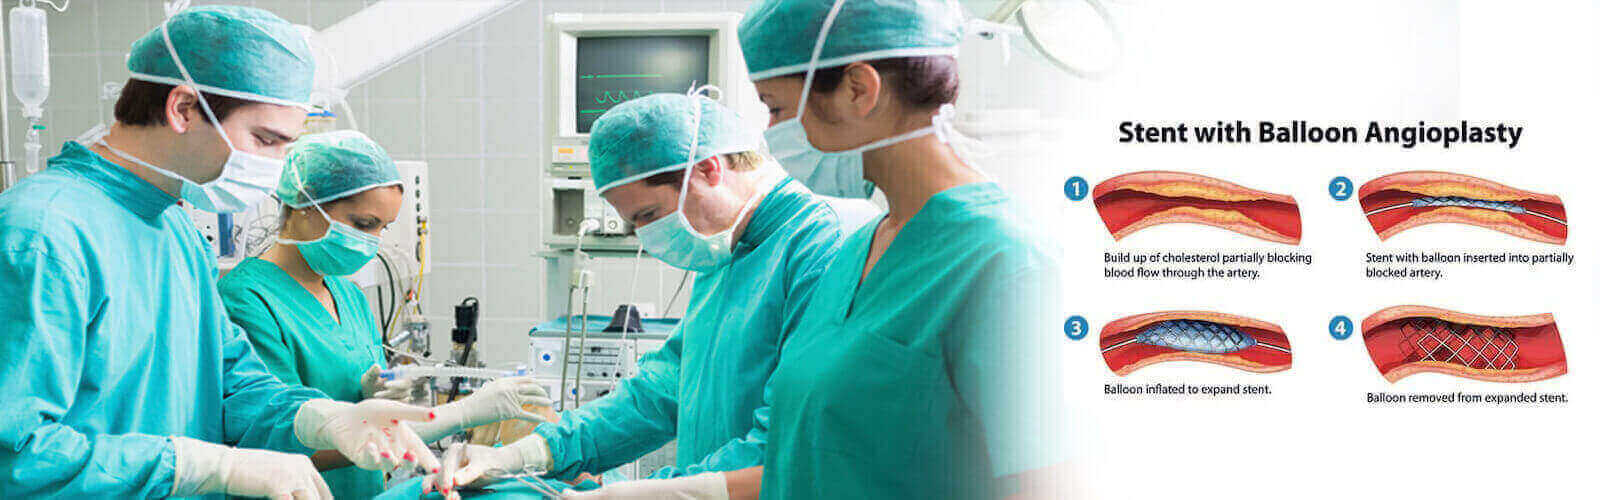 Angioplasty Surgery in Iowa